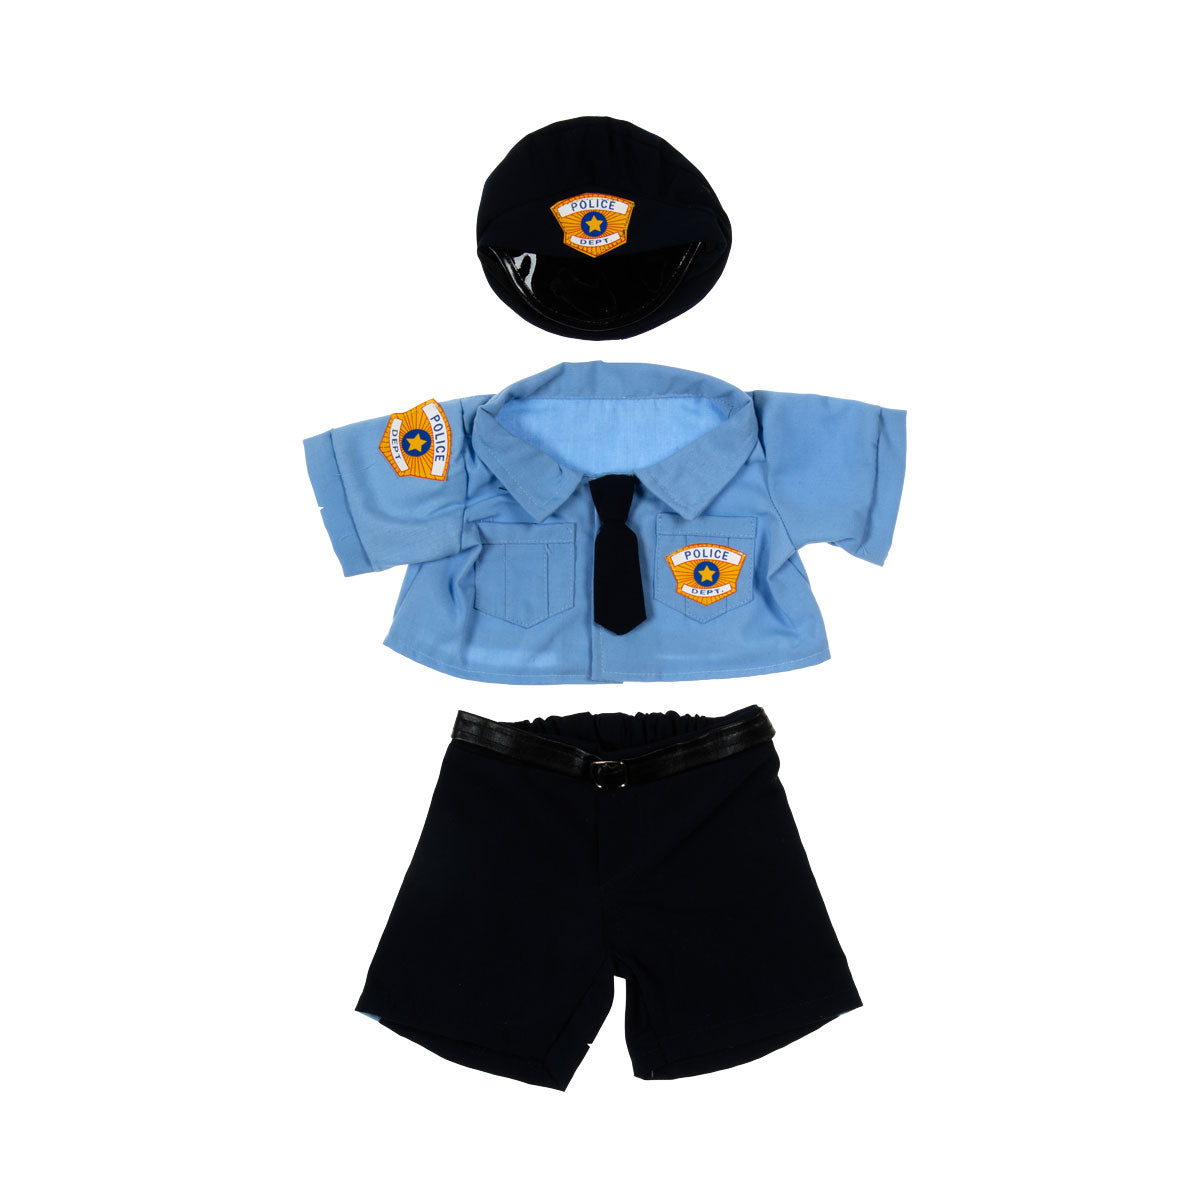 16" Police Uniform (The Bear Factory)